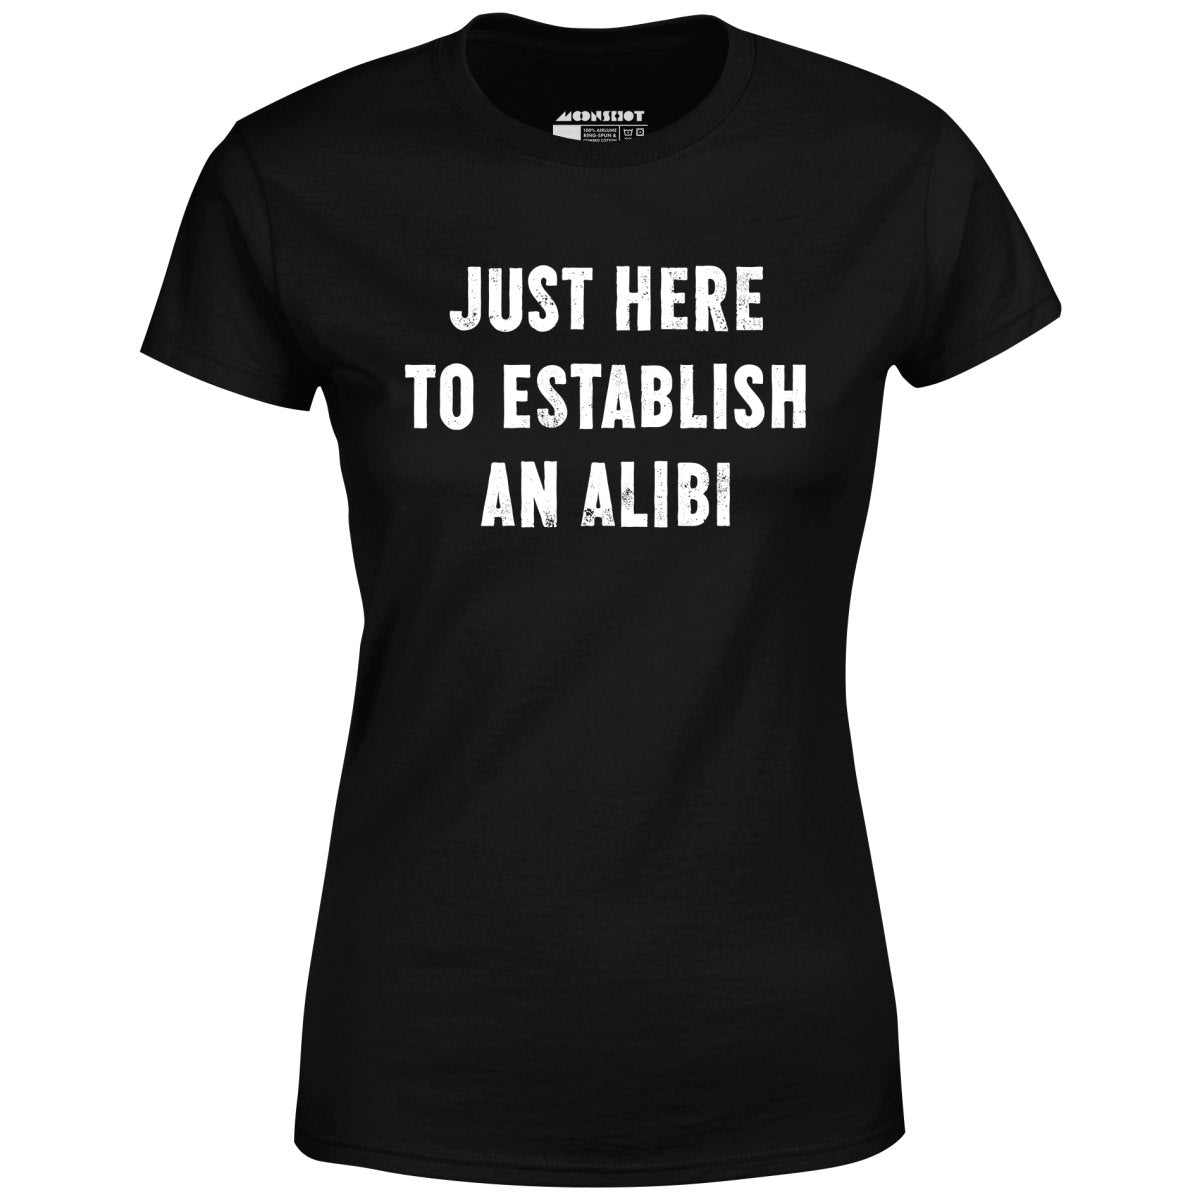 Just Here to Establish an Alibi - Women's T-Shirt